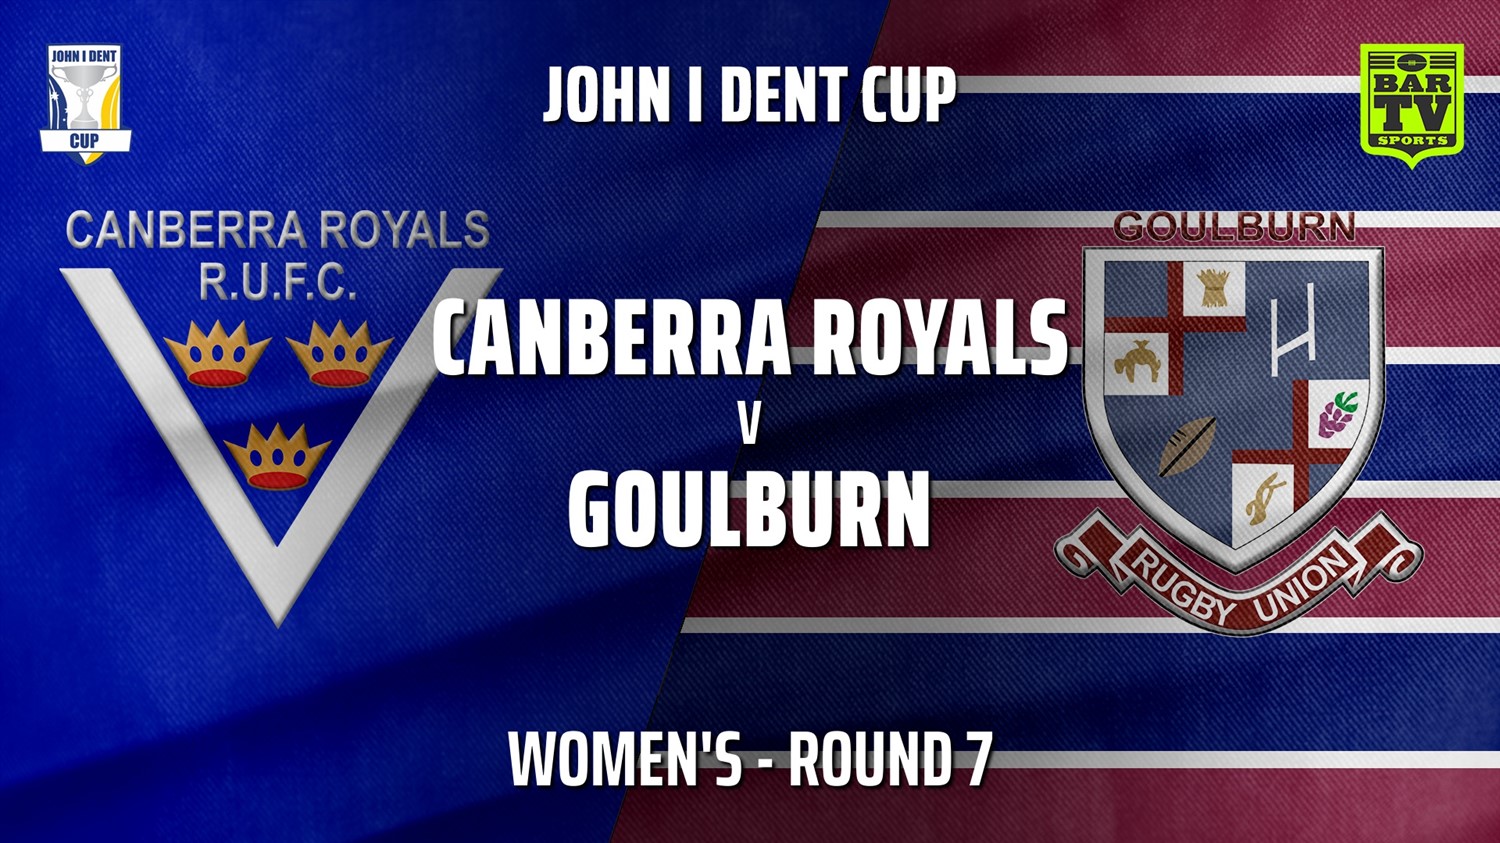 210605-John I Dent (ACT) Round 7 - Women's - Canberra Royals v Goulburn Slate Image